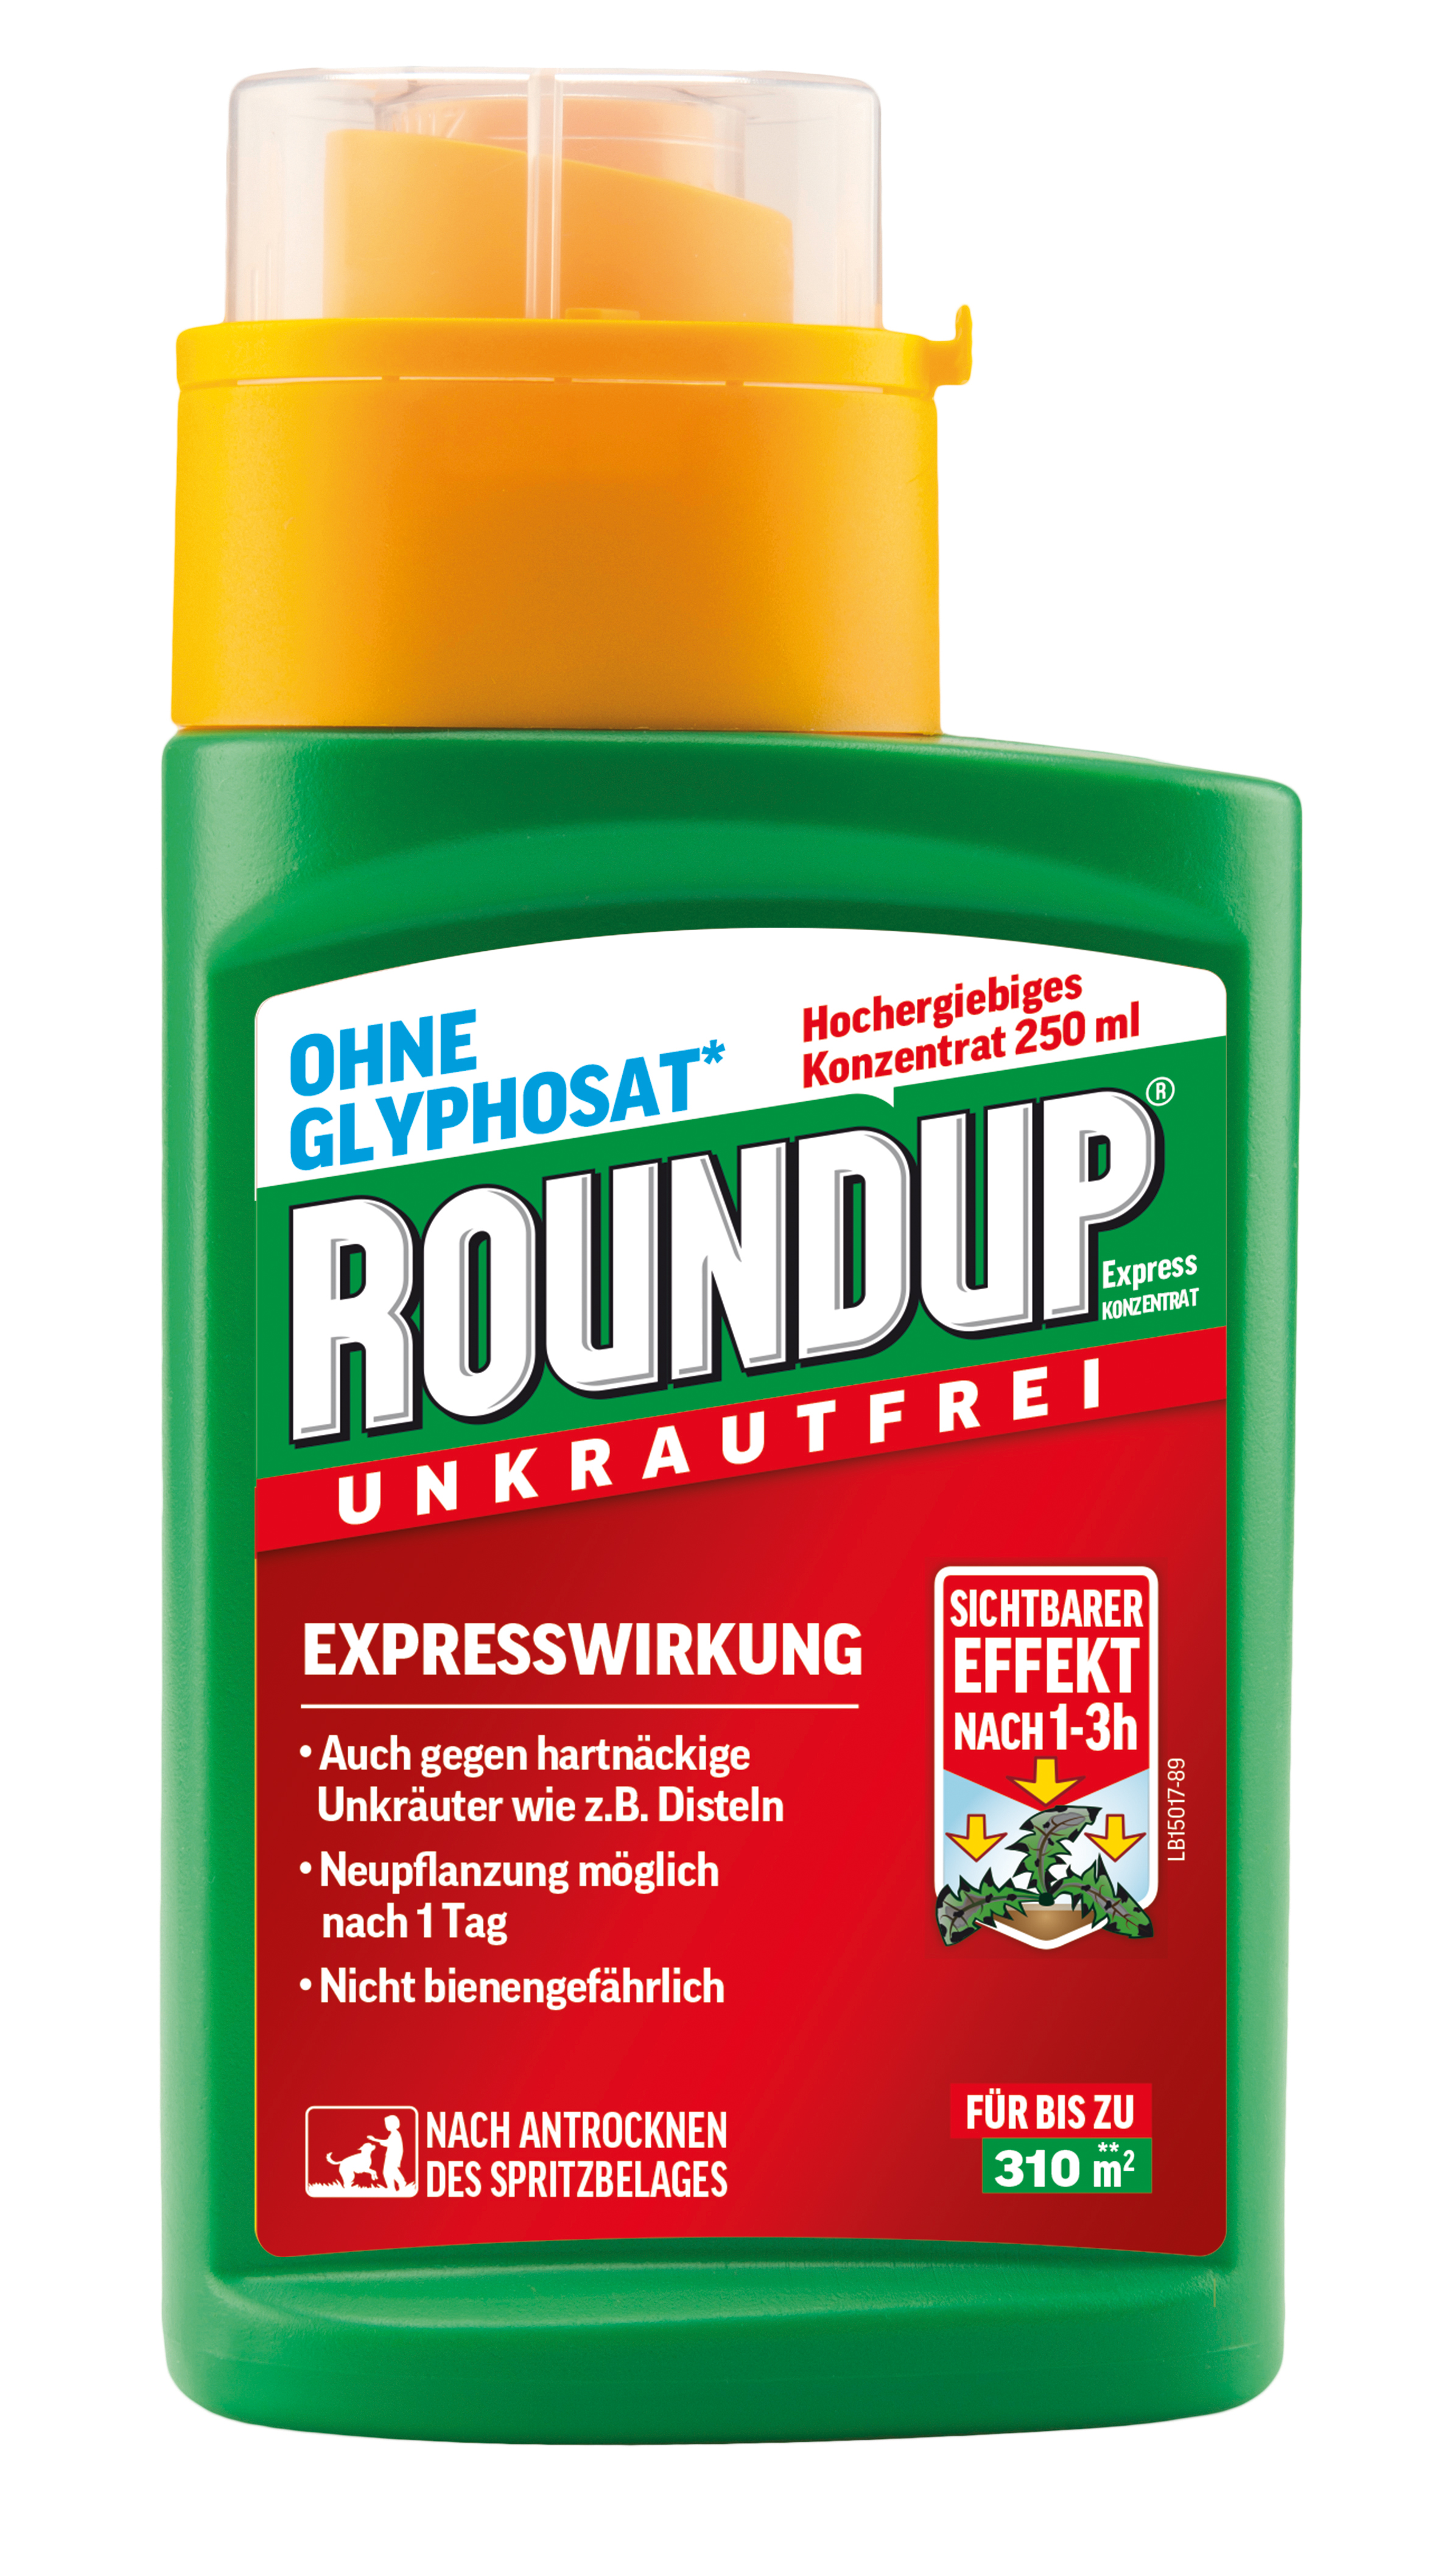 Roundup Express Unkrautfrei Konzentrat 250ml